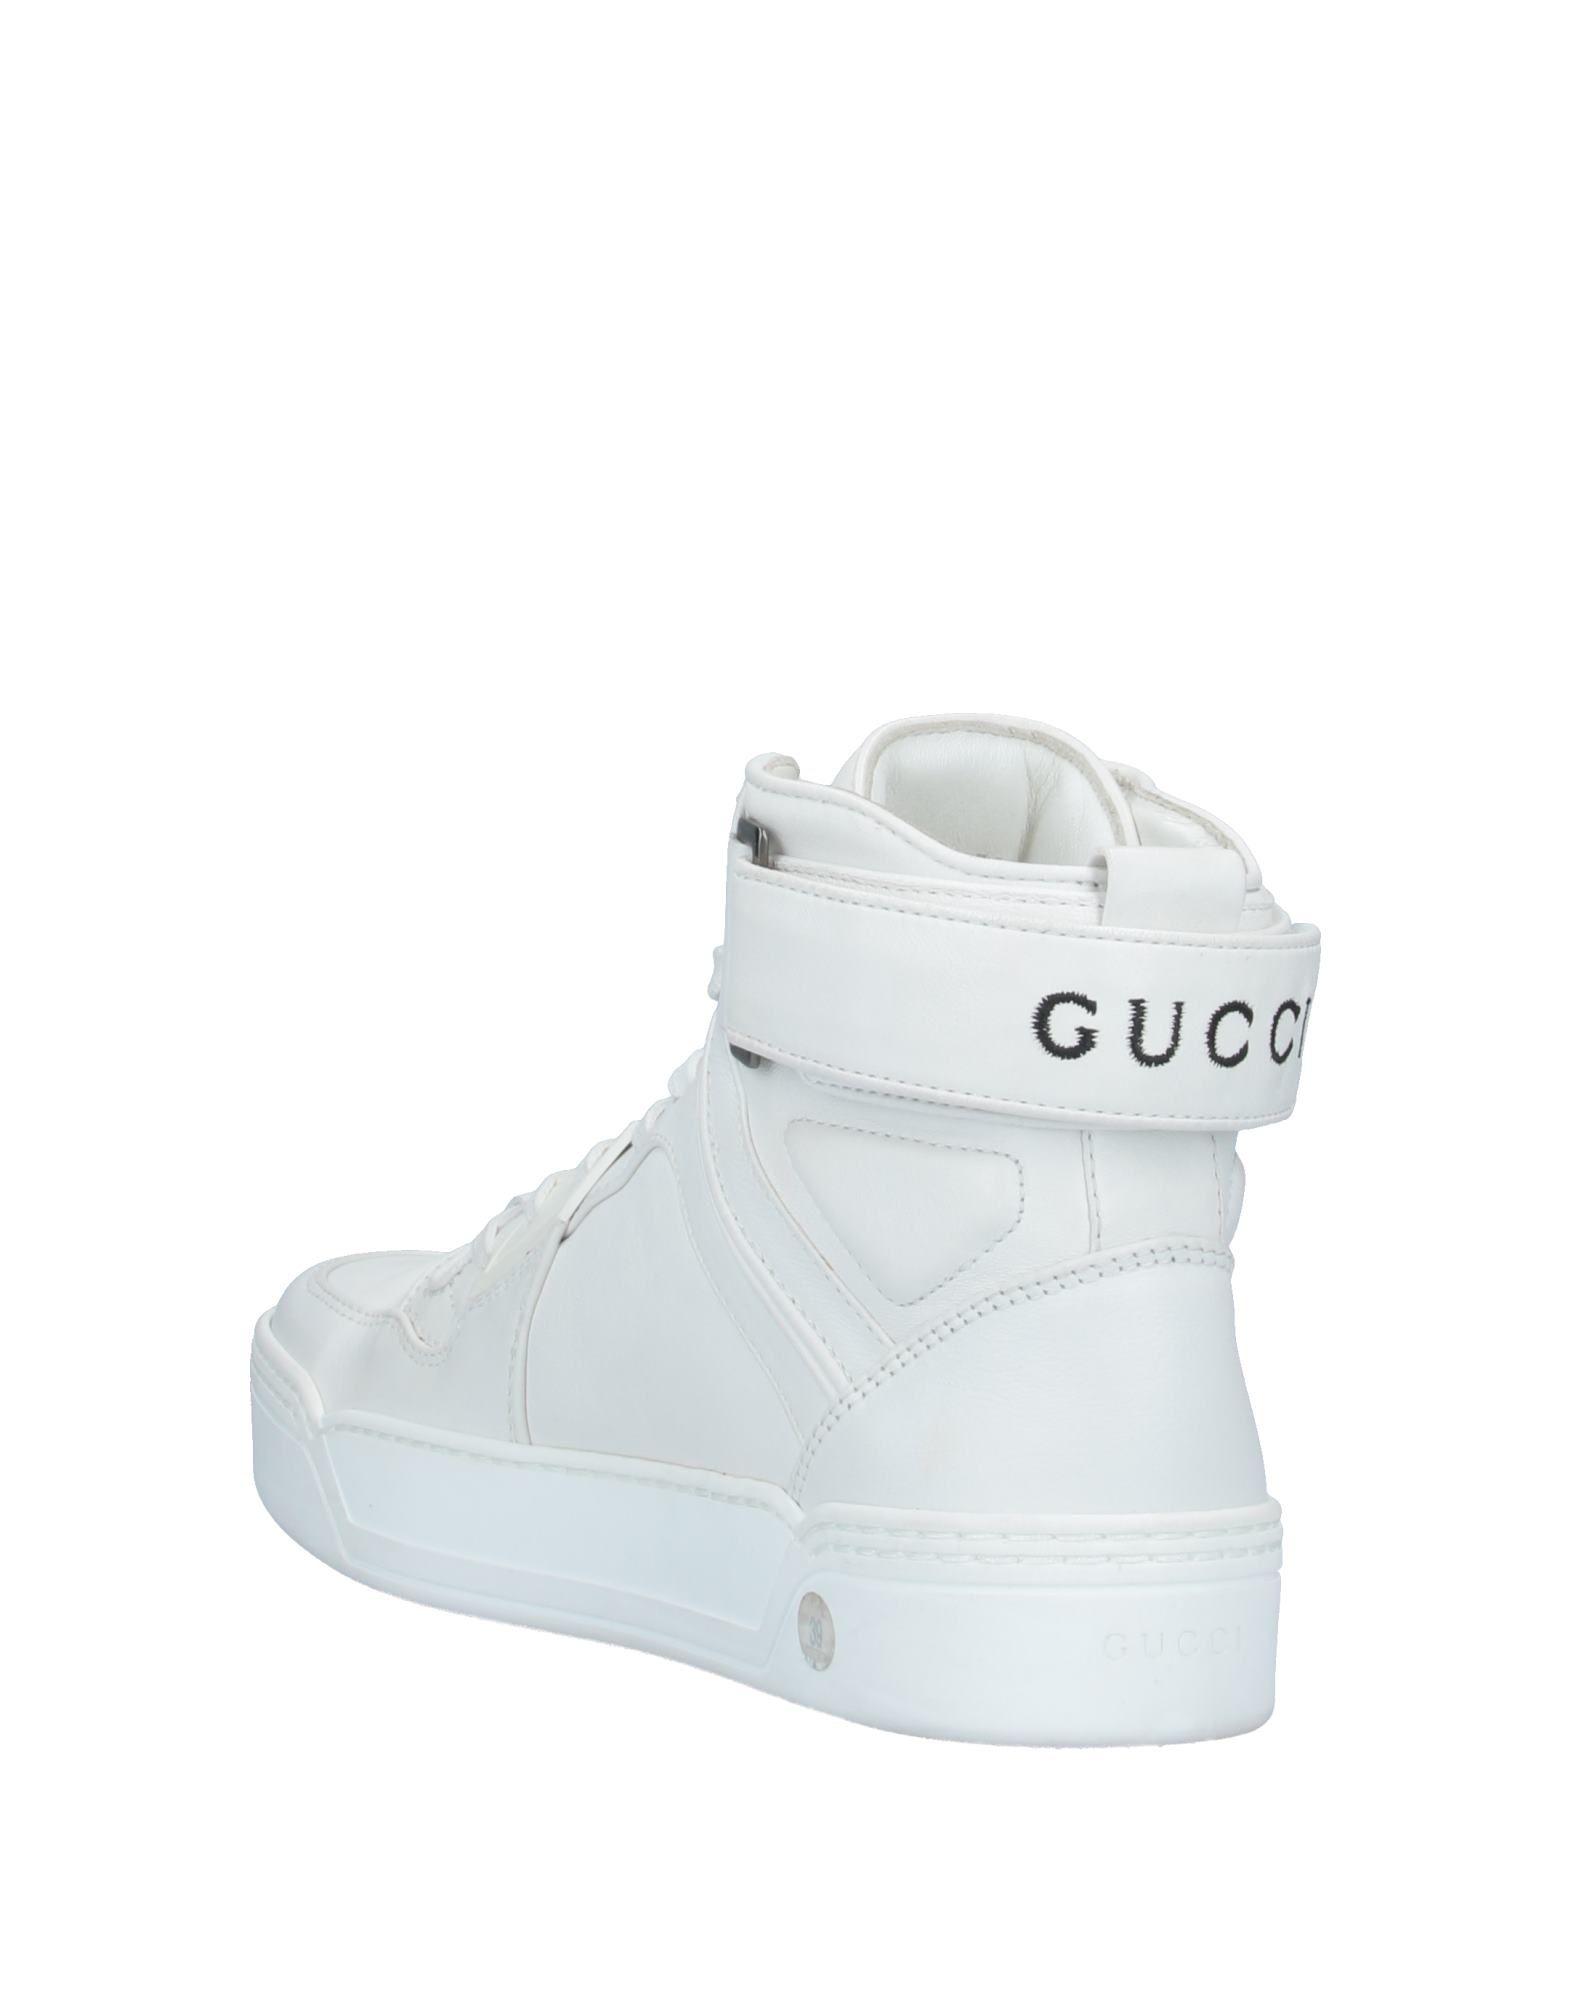 gucci high cut shoes, OFF 73%,www 